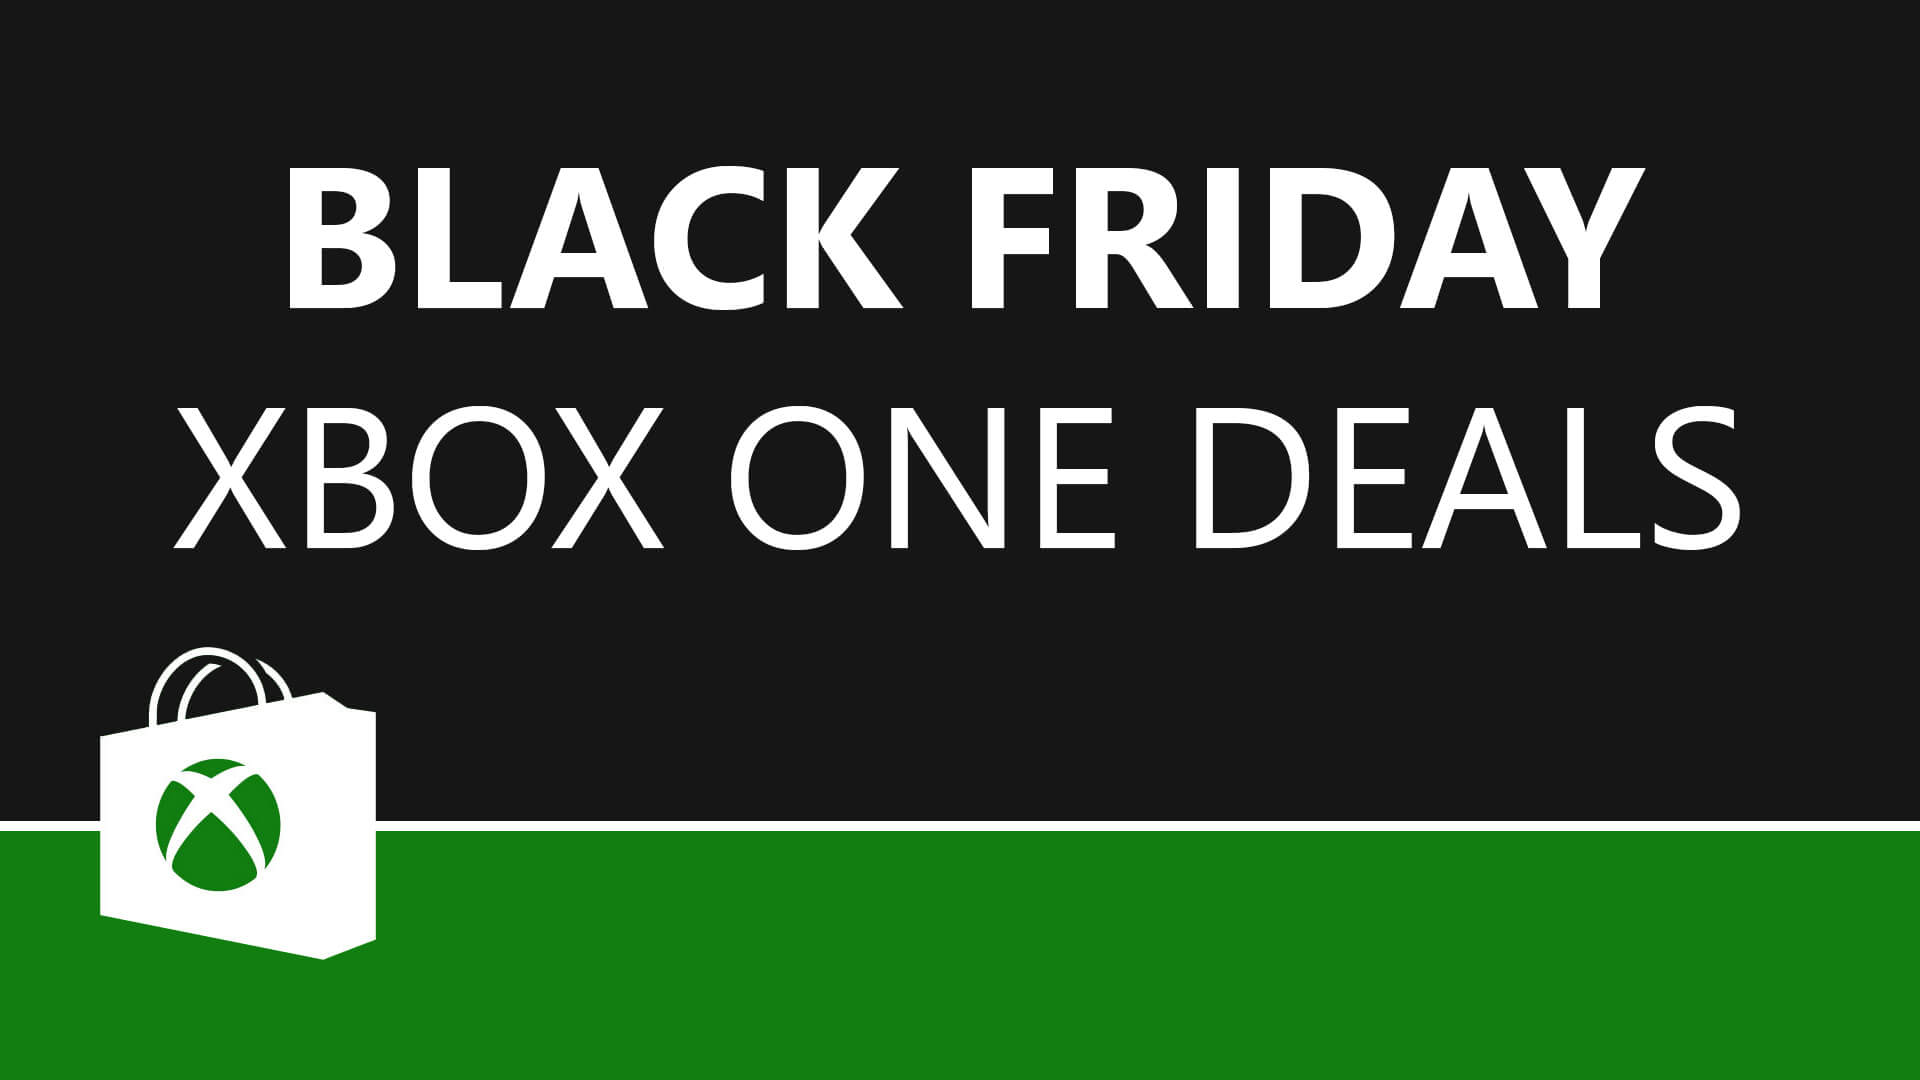 Xbox One Black Friday Deals 2018